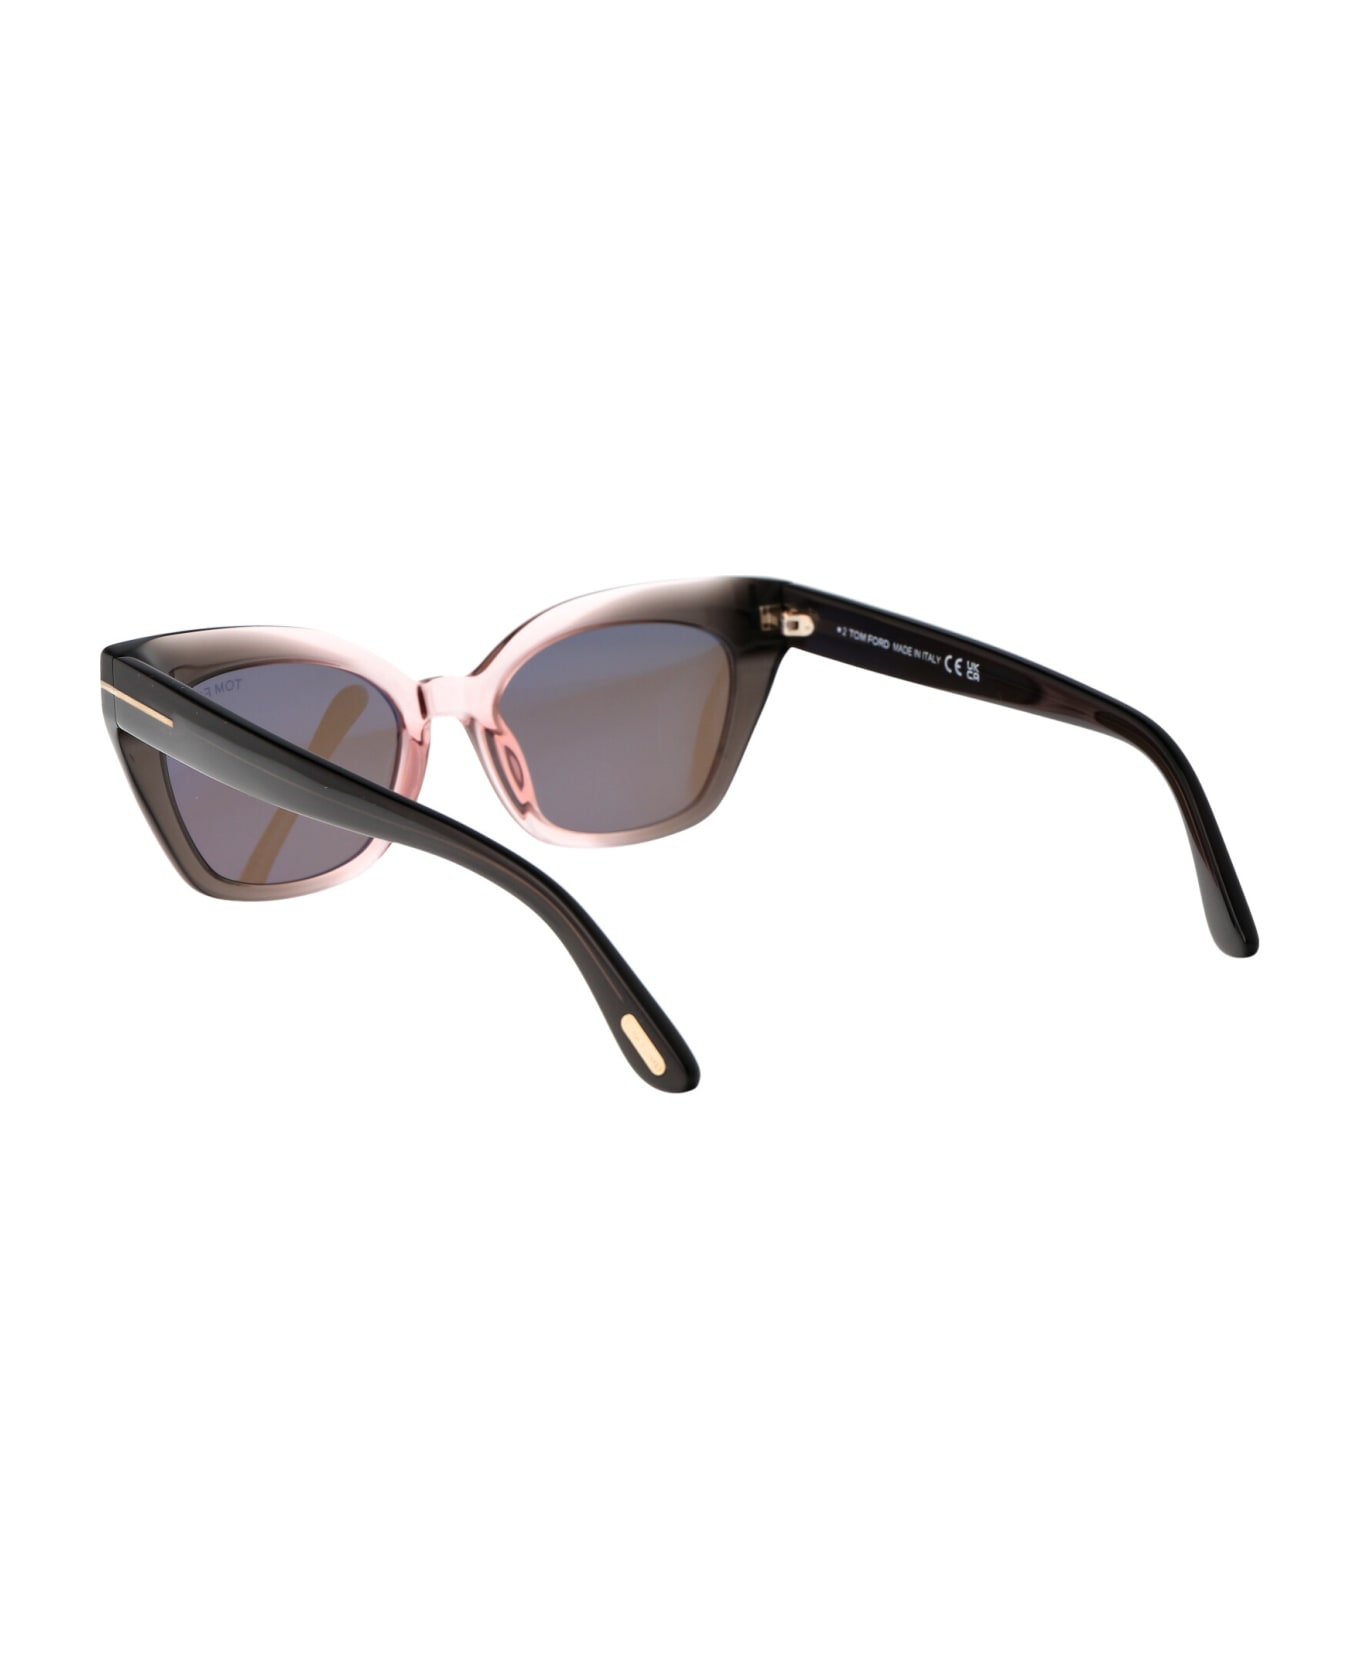 Tom Ford Eyewear Juliette Sunglasses - 20J Grigio/Altro / Roviex